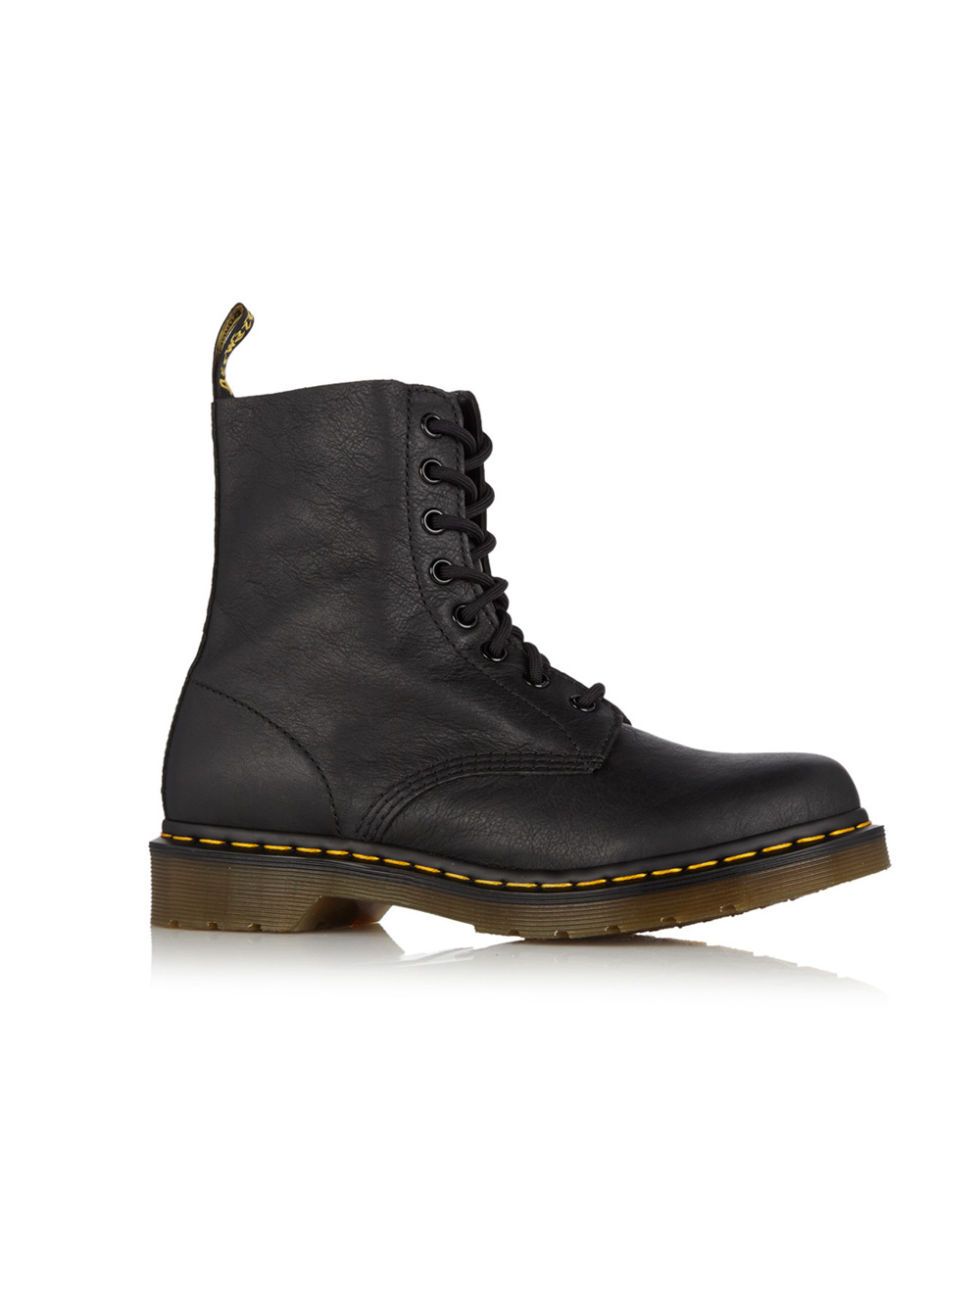 Footwear, Brown, Product, Shoe, Boot, Leather, Black, Tan, Beige, Steel-toe boot, 